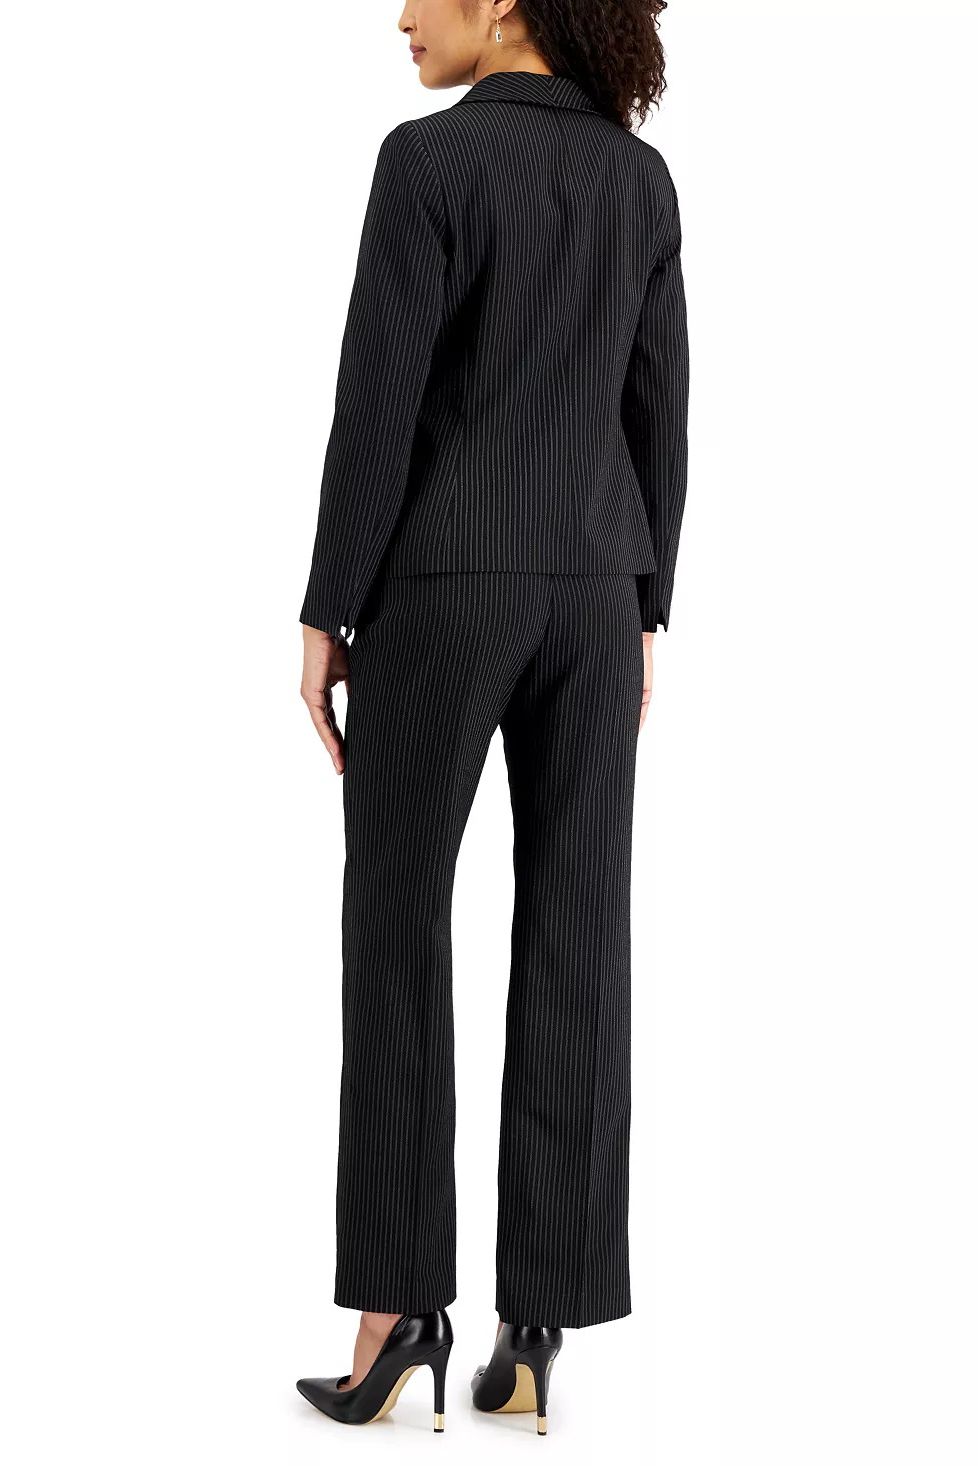 Le Suit Black and White Striped Suit